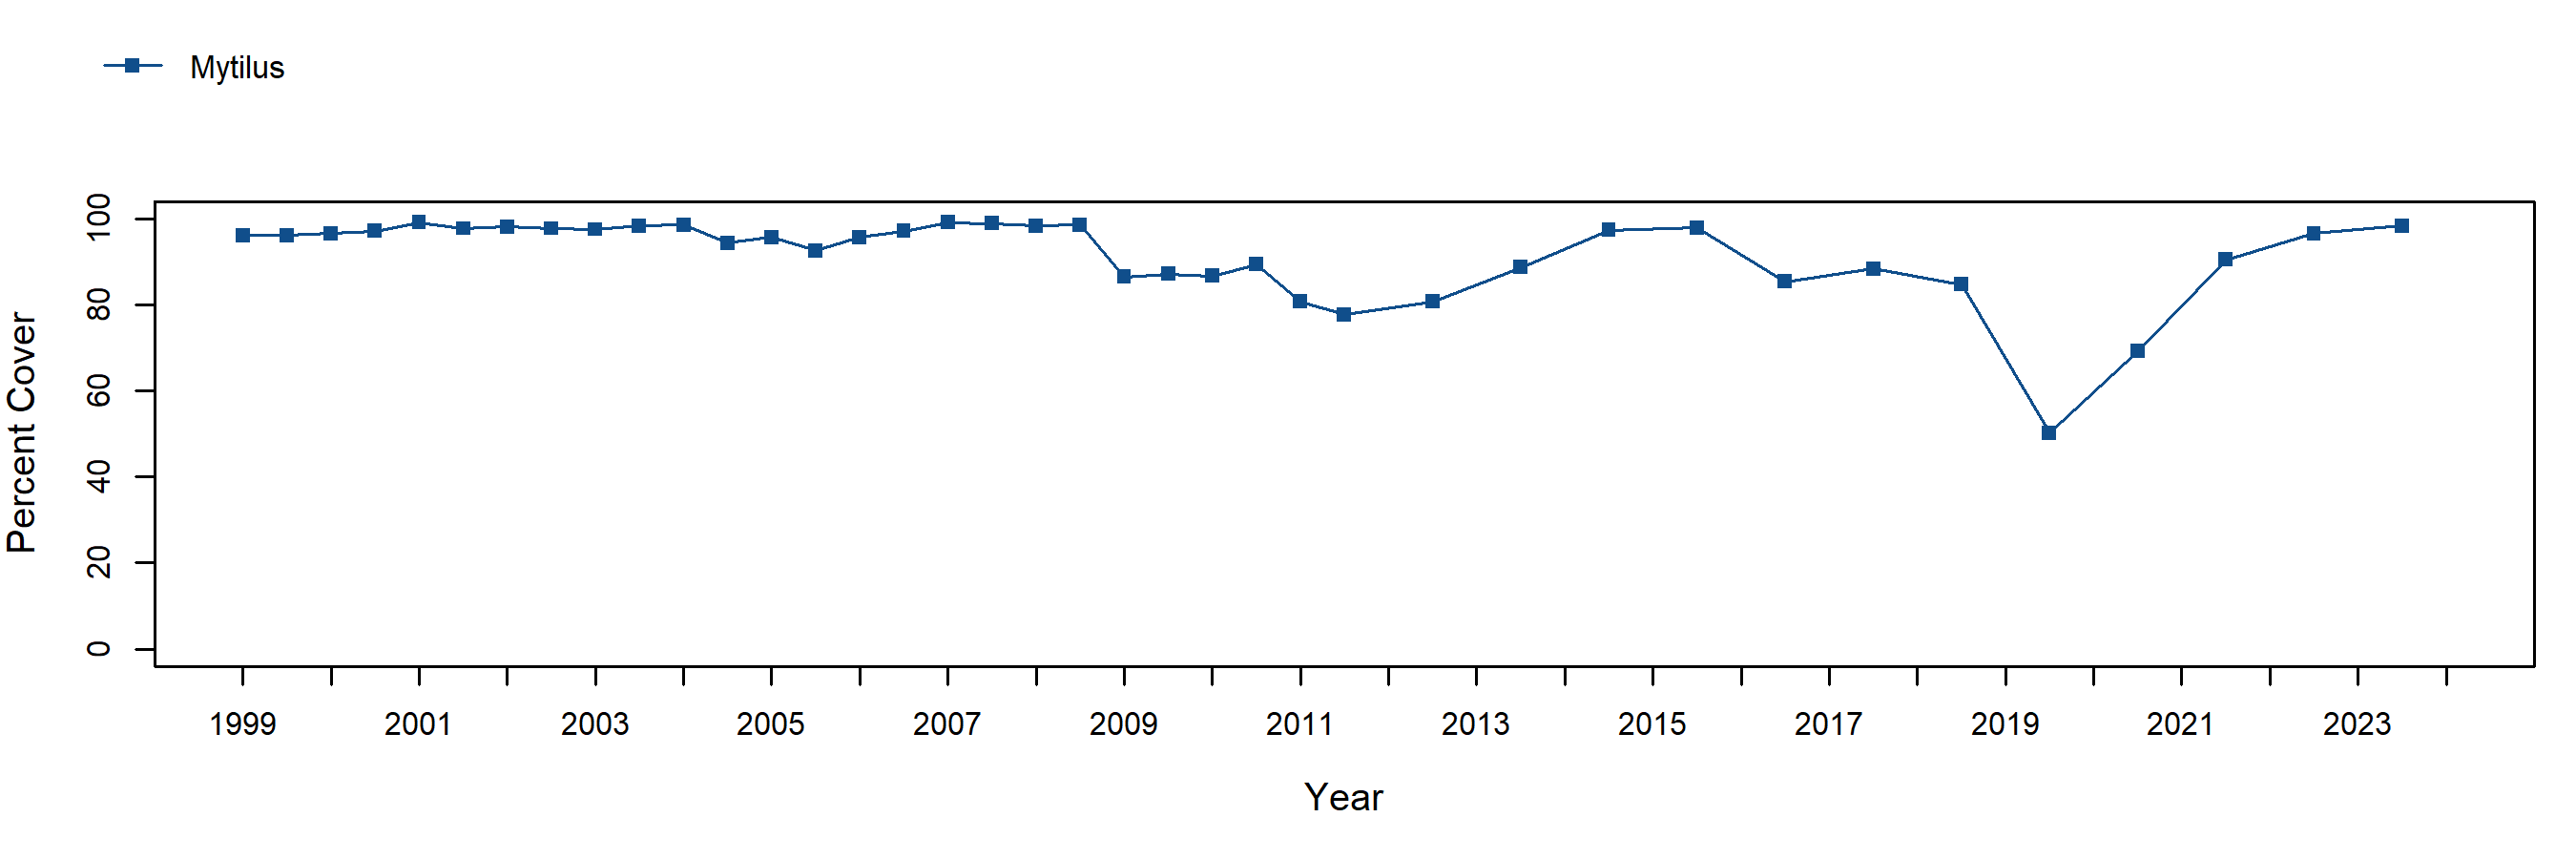 Scott Creek Mytilus trend plot